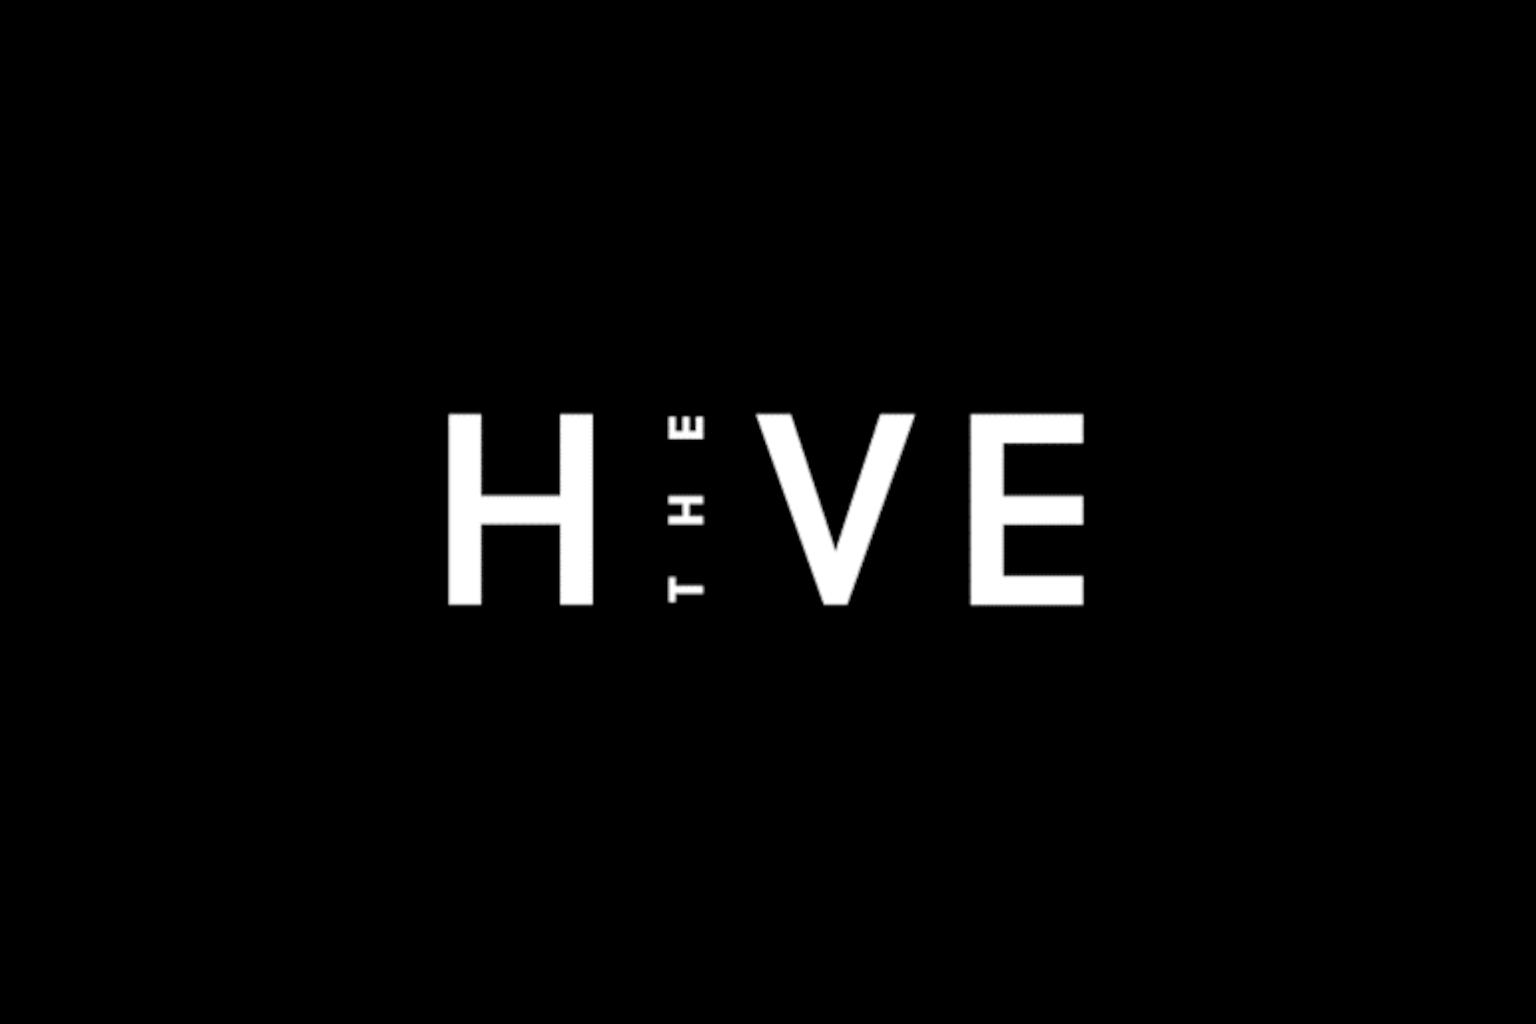 Logo THE HIVE